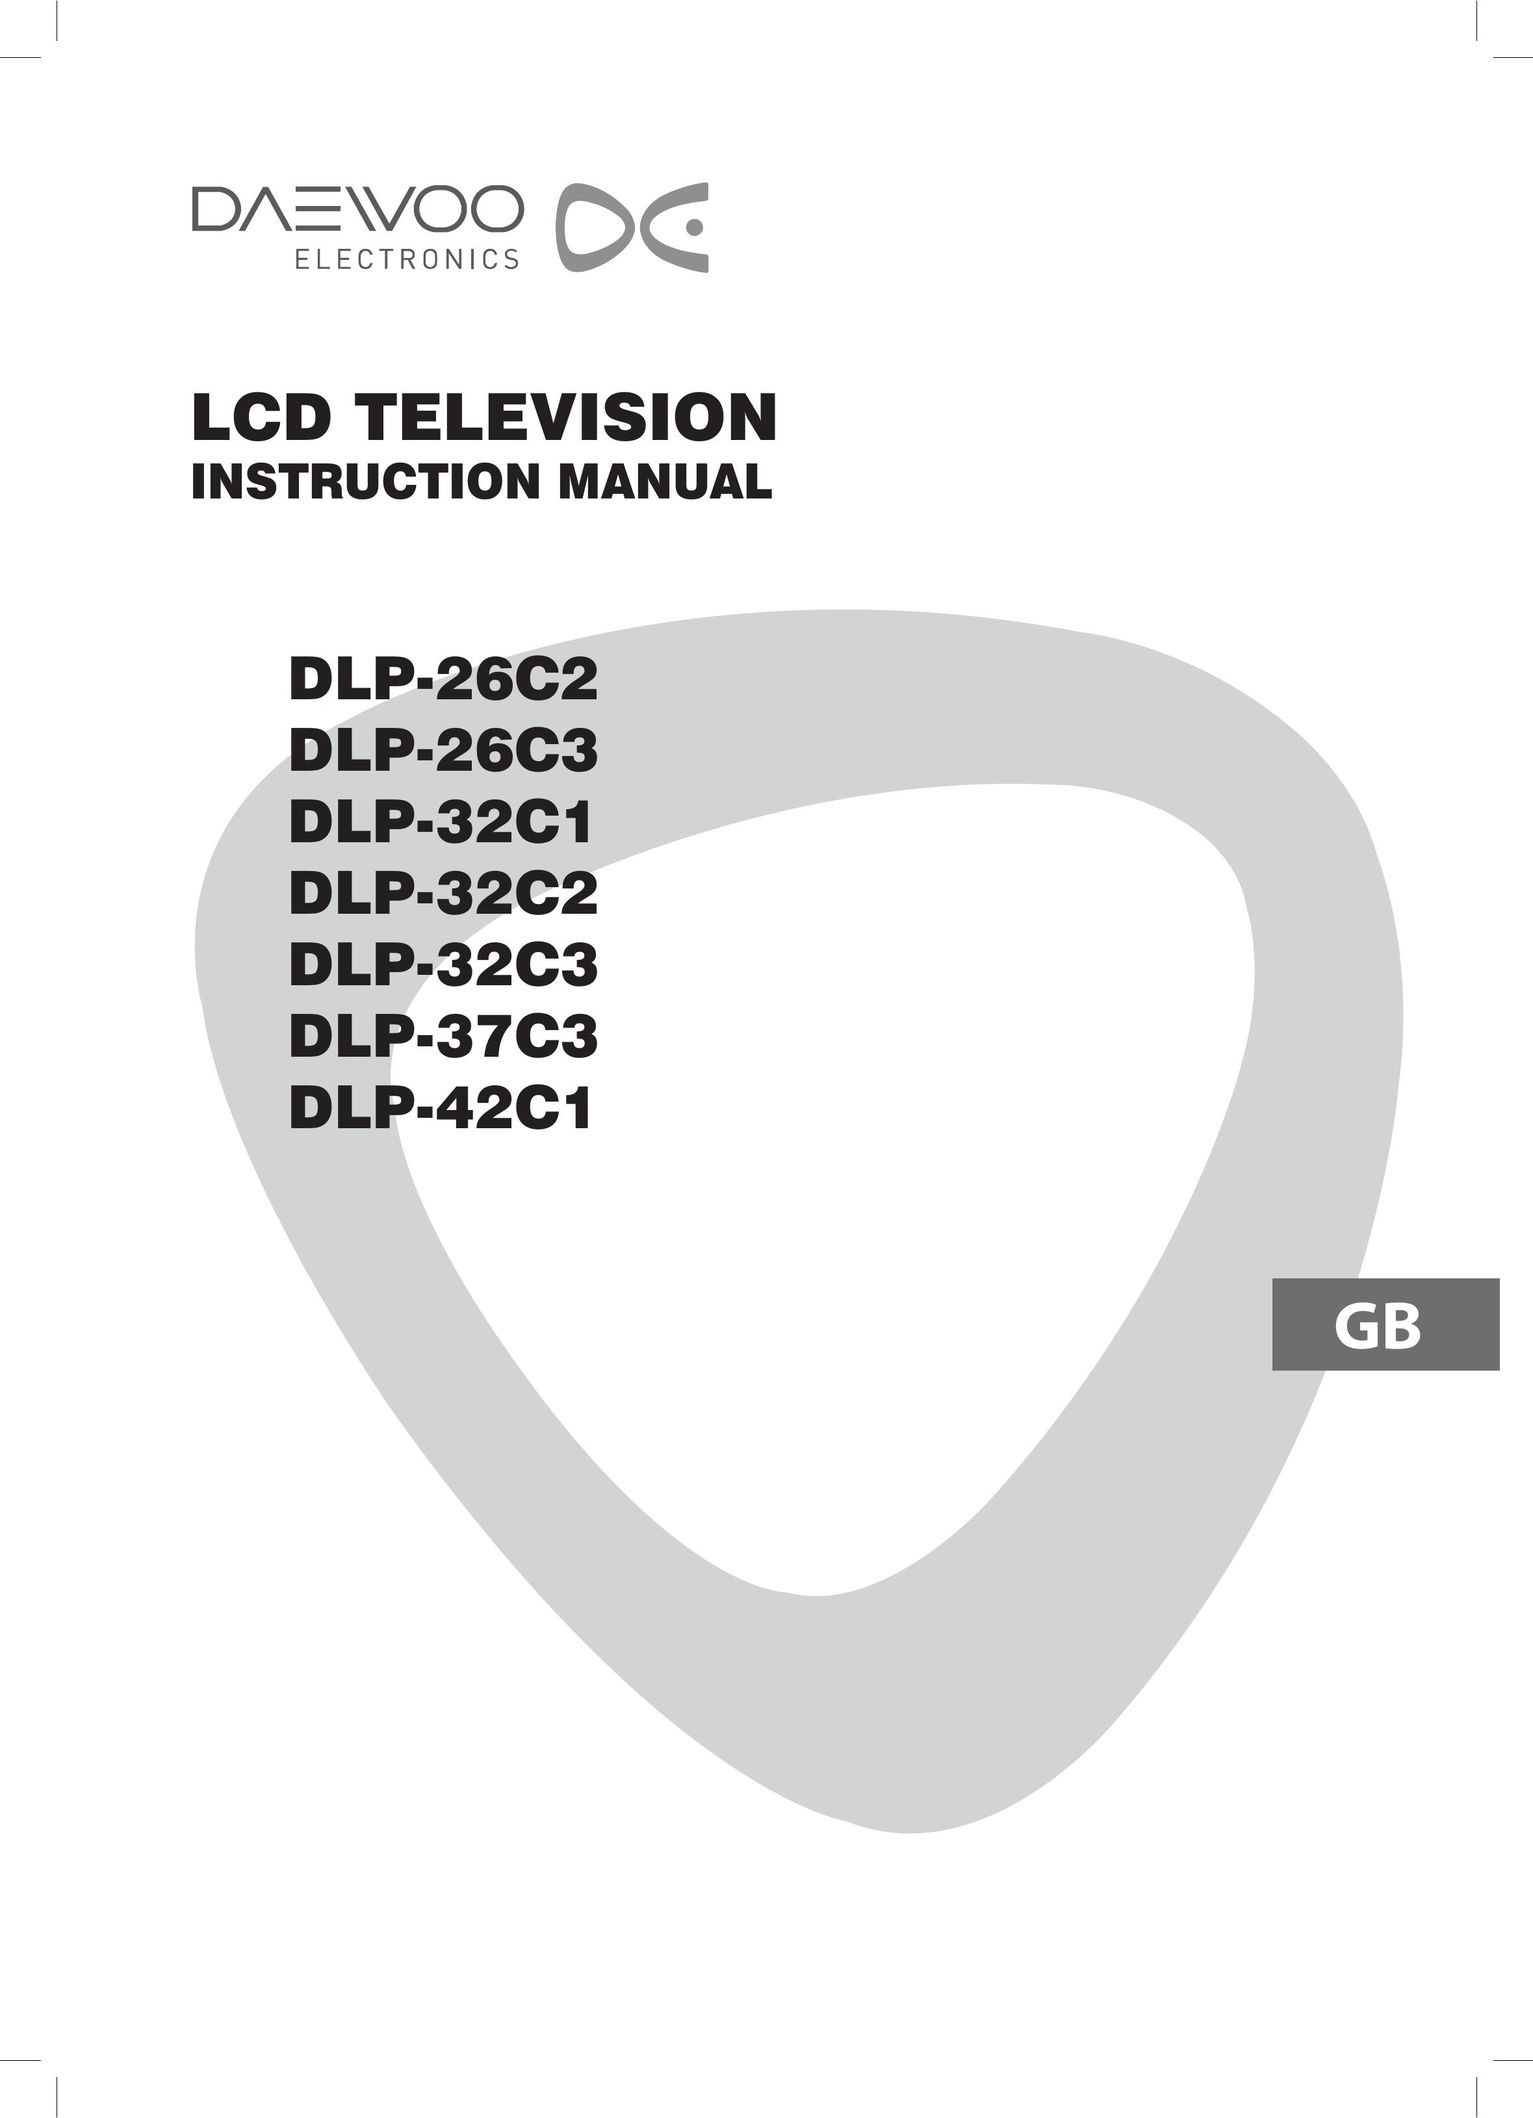 Daewoo DLP-32C2 Flat Panel Television User Manual